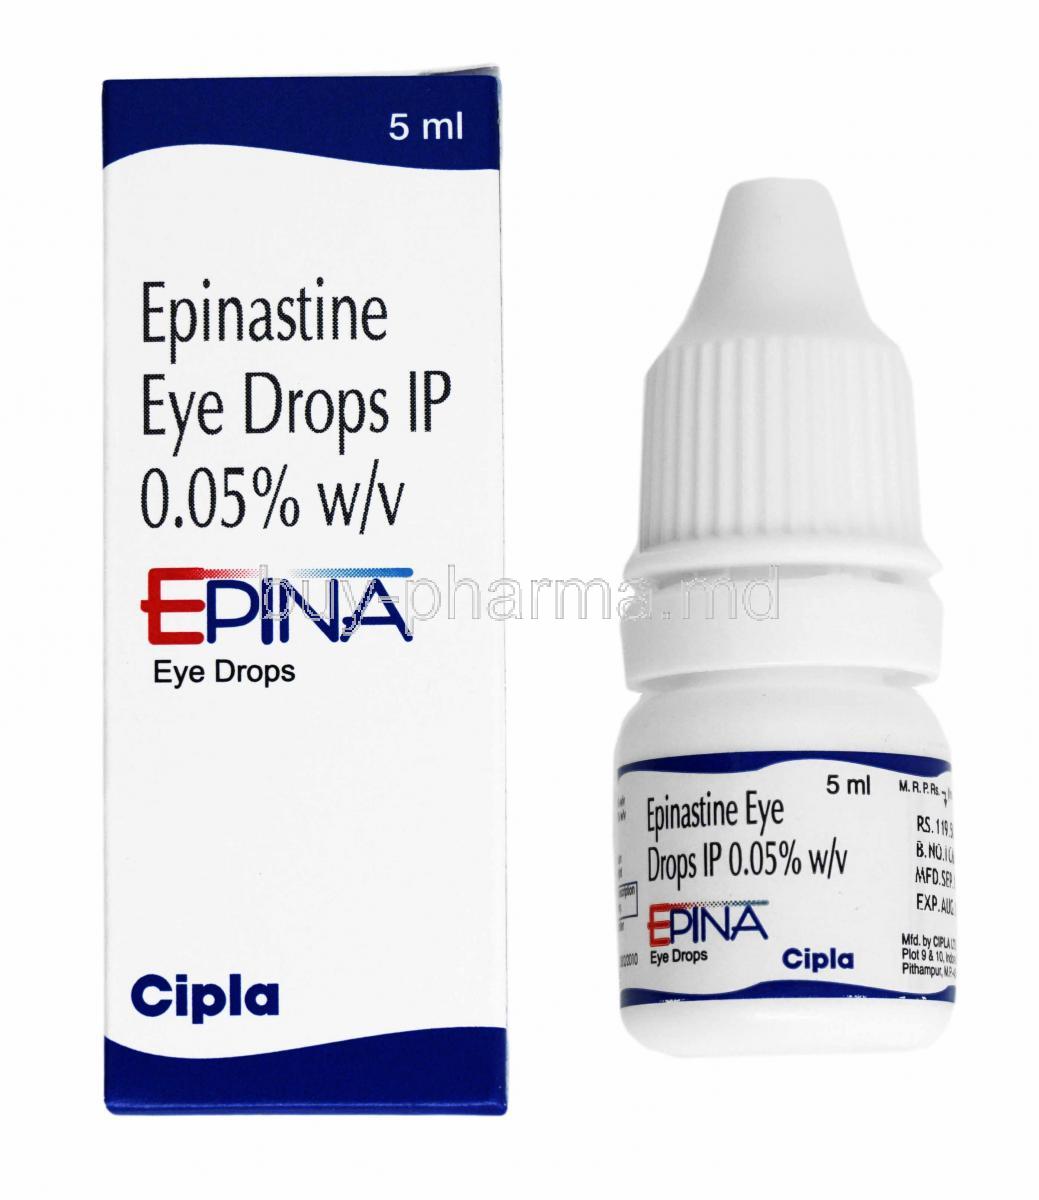 Epina Eye Drop, Epinastine box and bottle